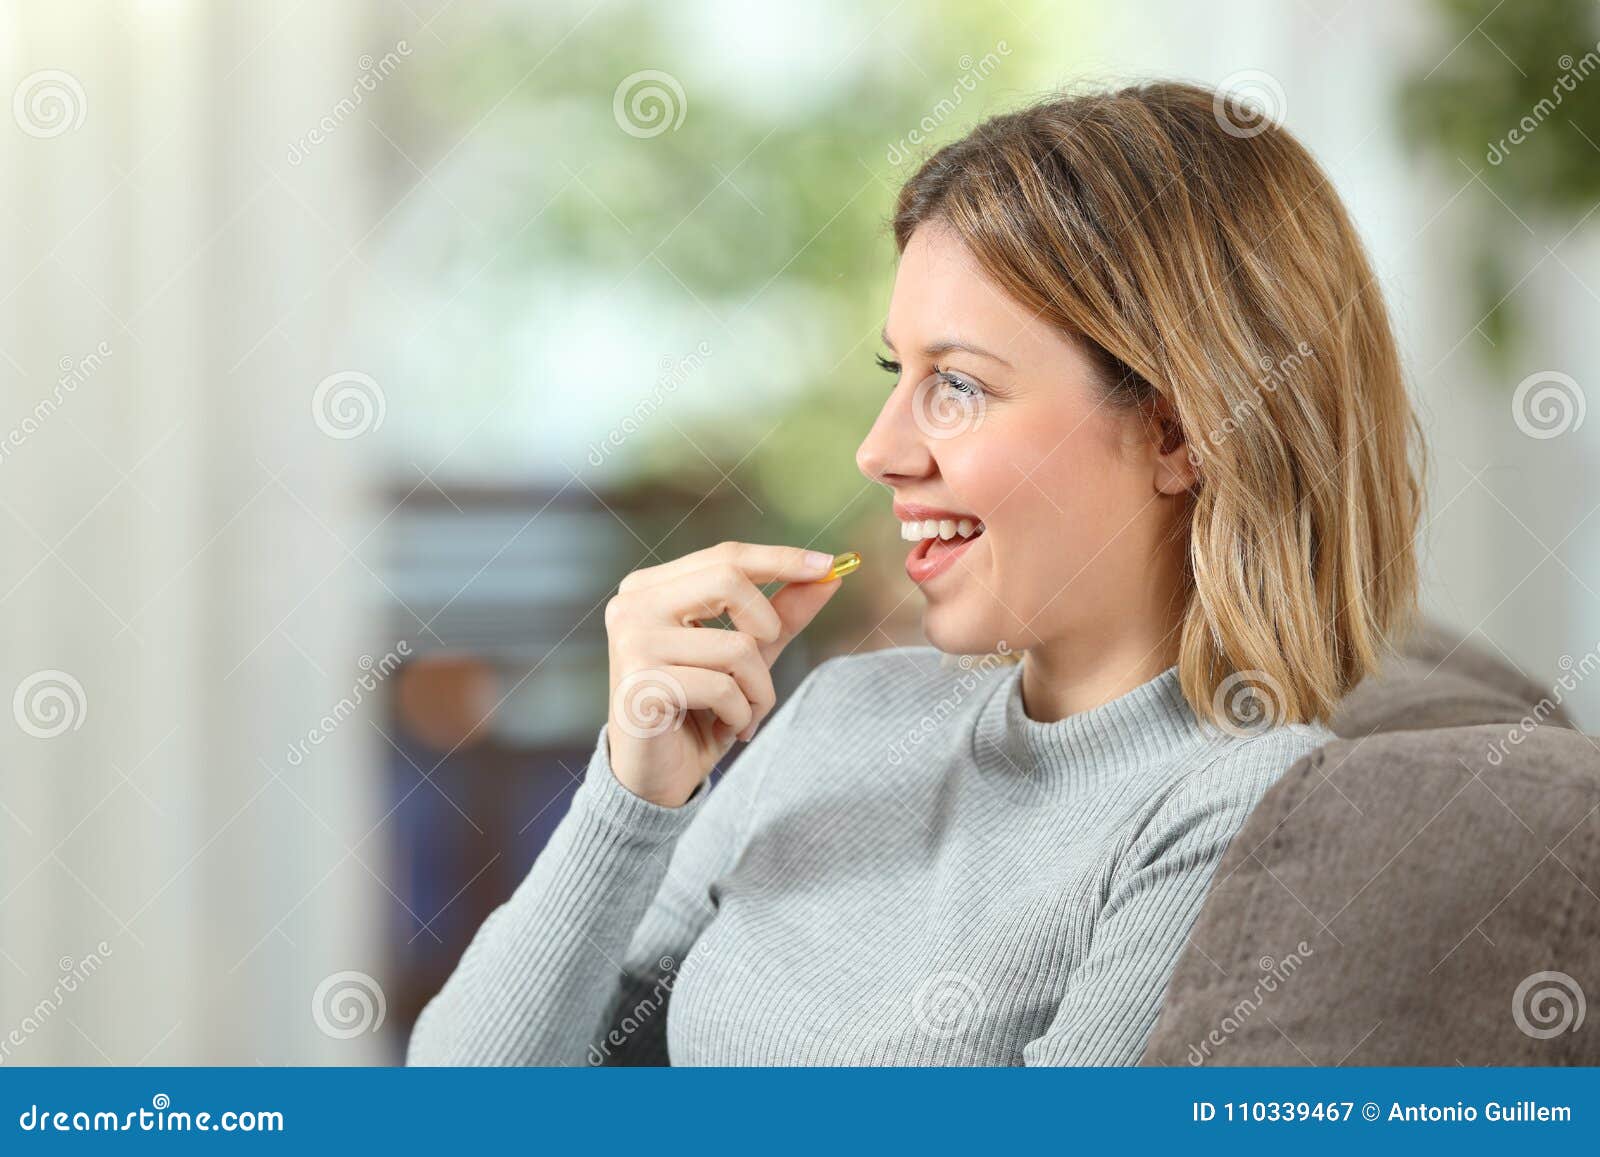 profile of a happy woman taking a vitamin pill